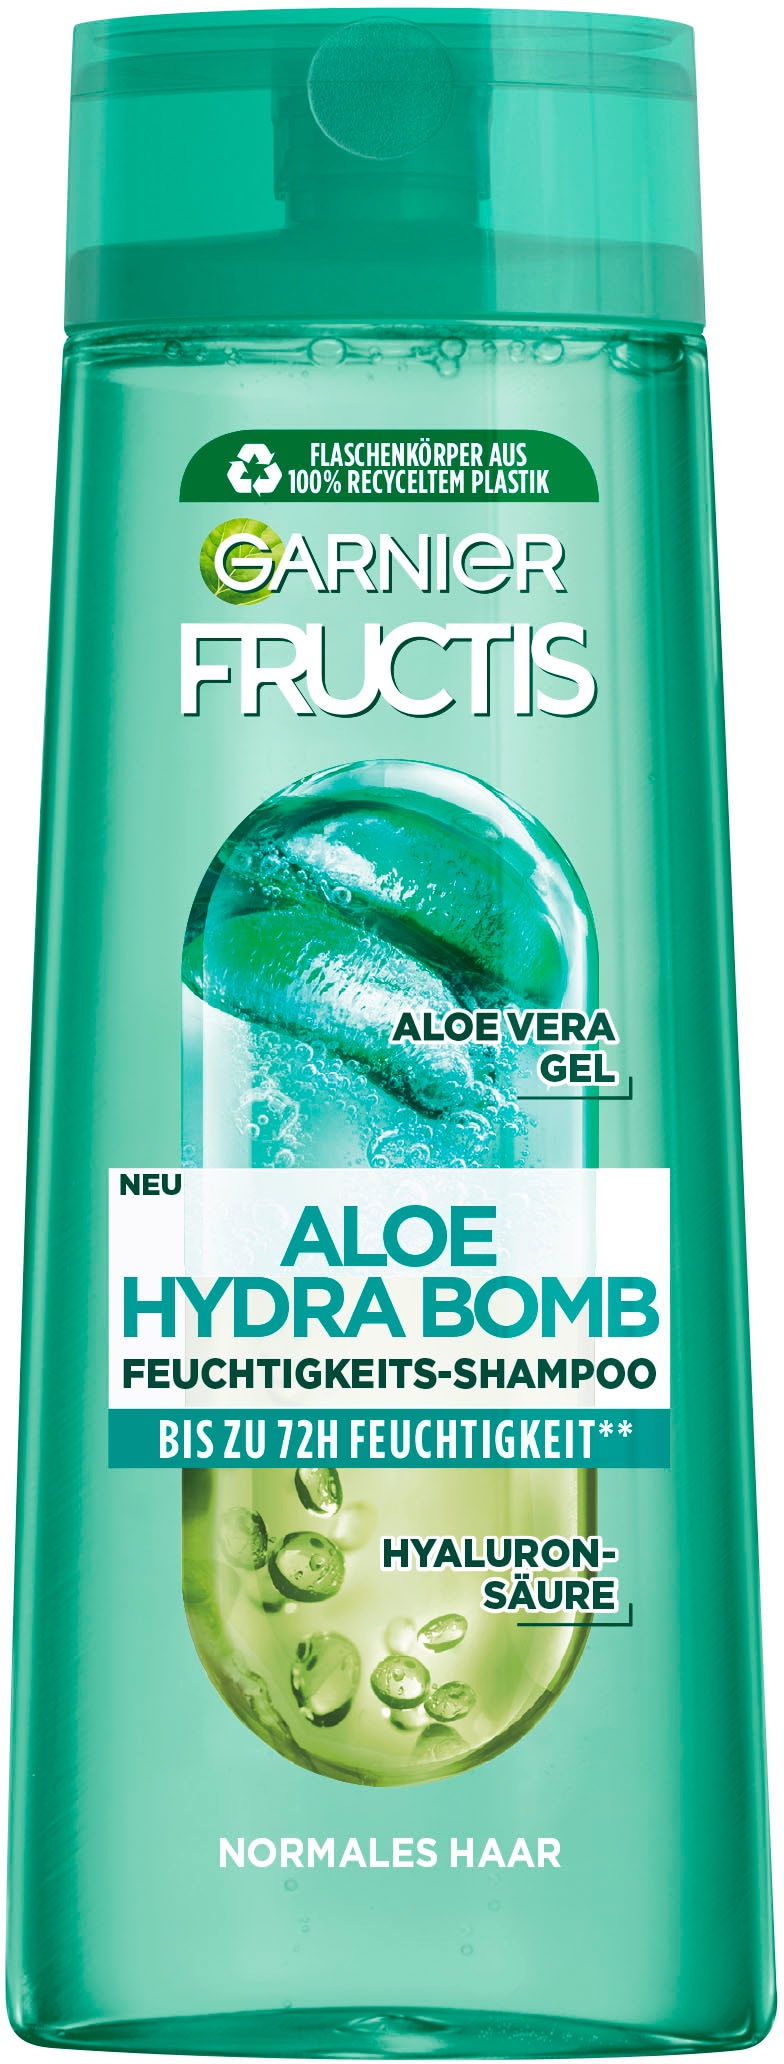 GARNIER Aloe shoppen Fructis OTTO Haarshampoo Hydra tlg.) 6 (Packung, Shampoo«, Bomb bei »Garnier online